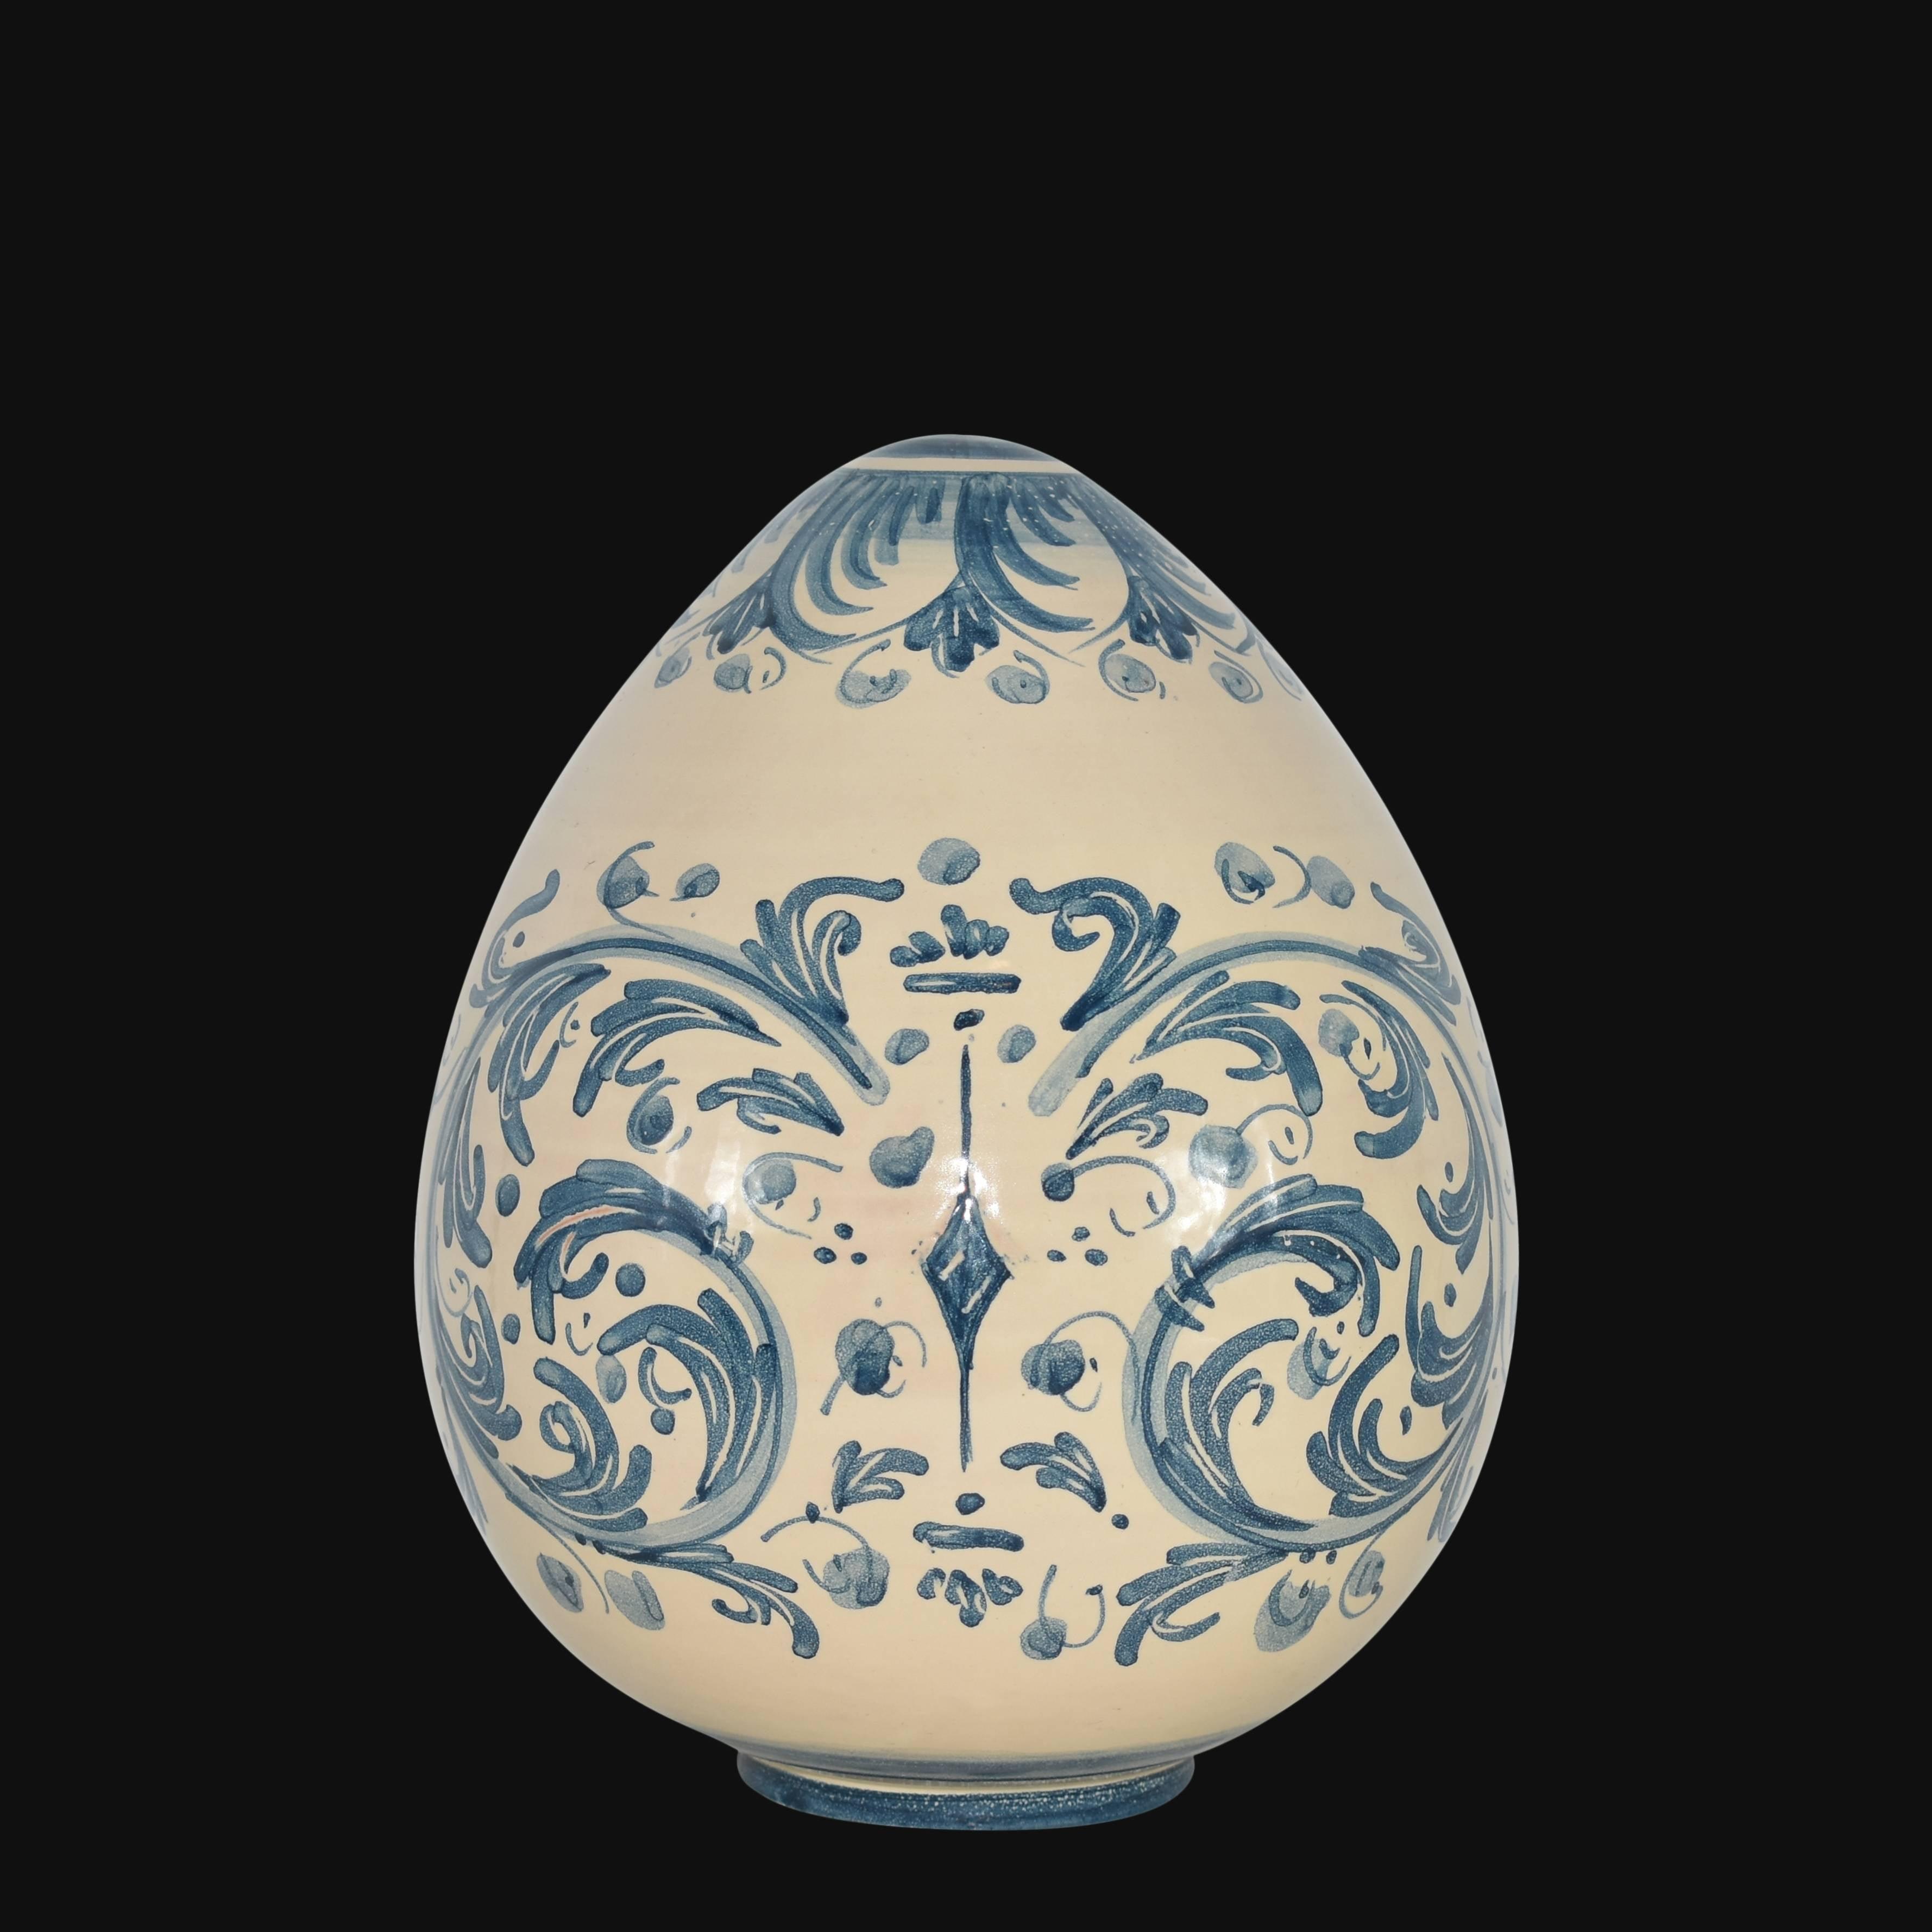 Uovo in ceramica h 15/20 cm Serie d'arte mono blu - Ceramiche di Caltagirone - Ceramiche di Caltagirone Sofia